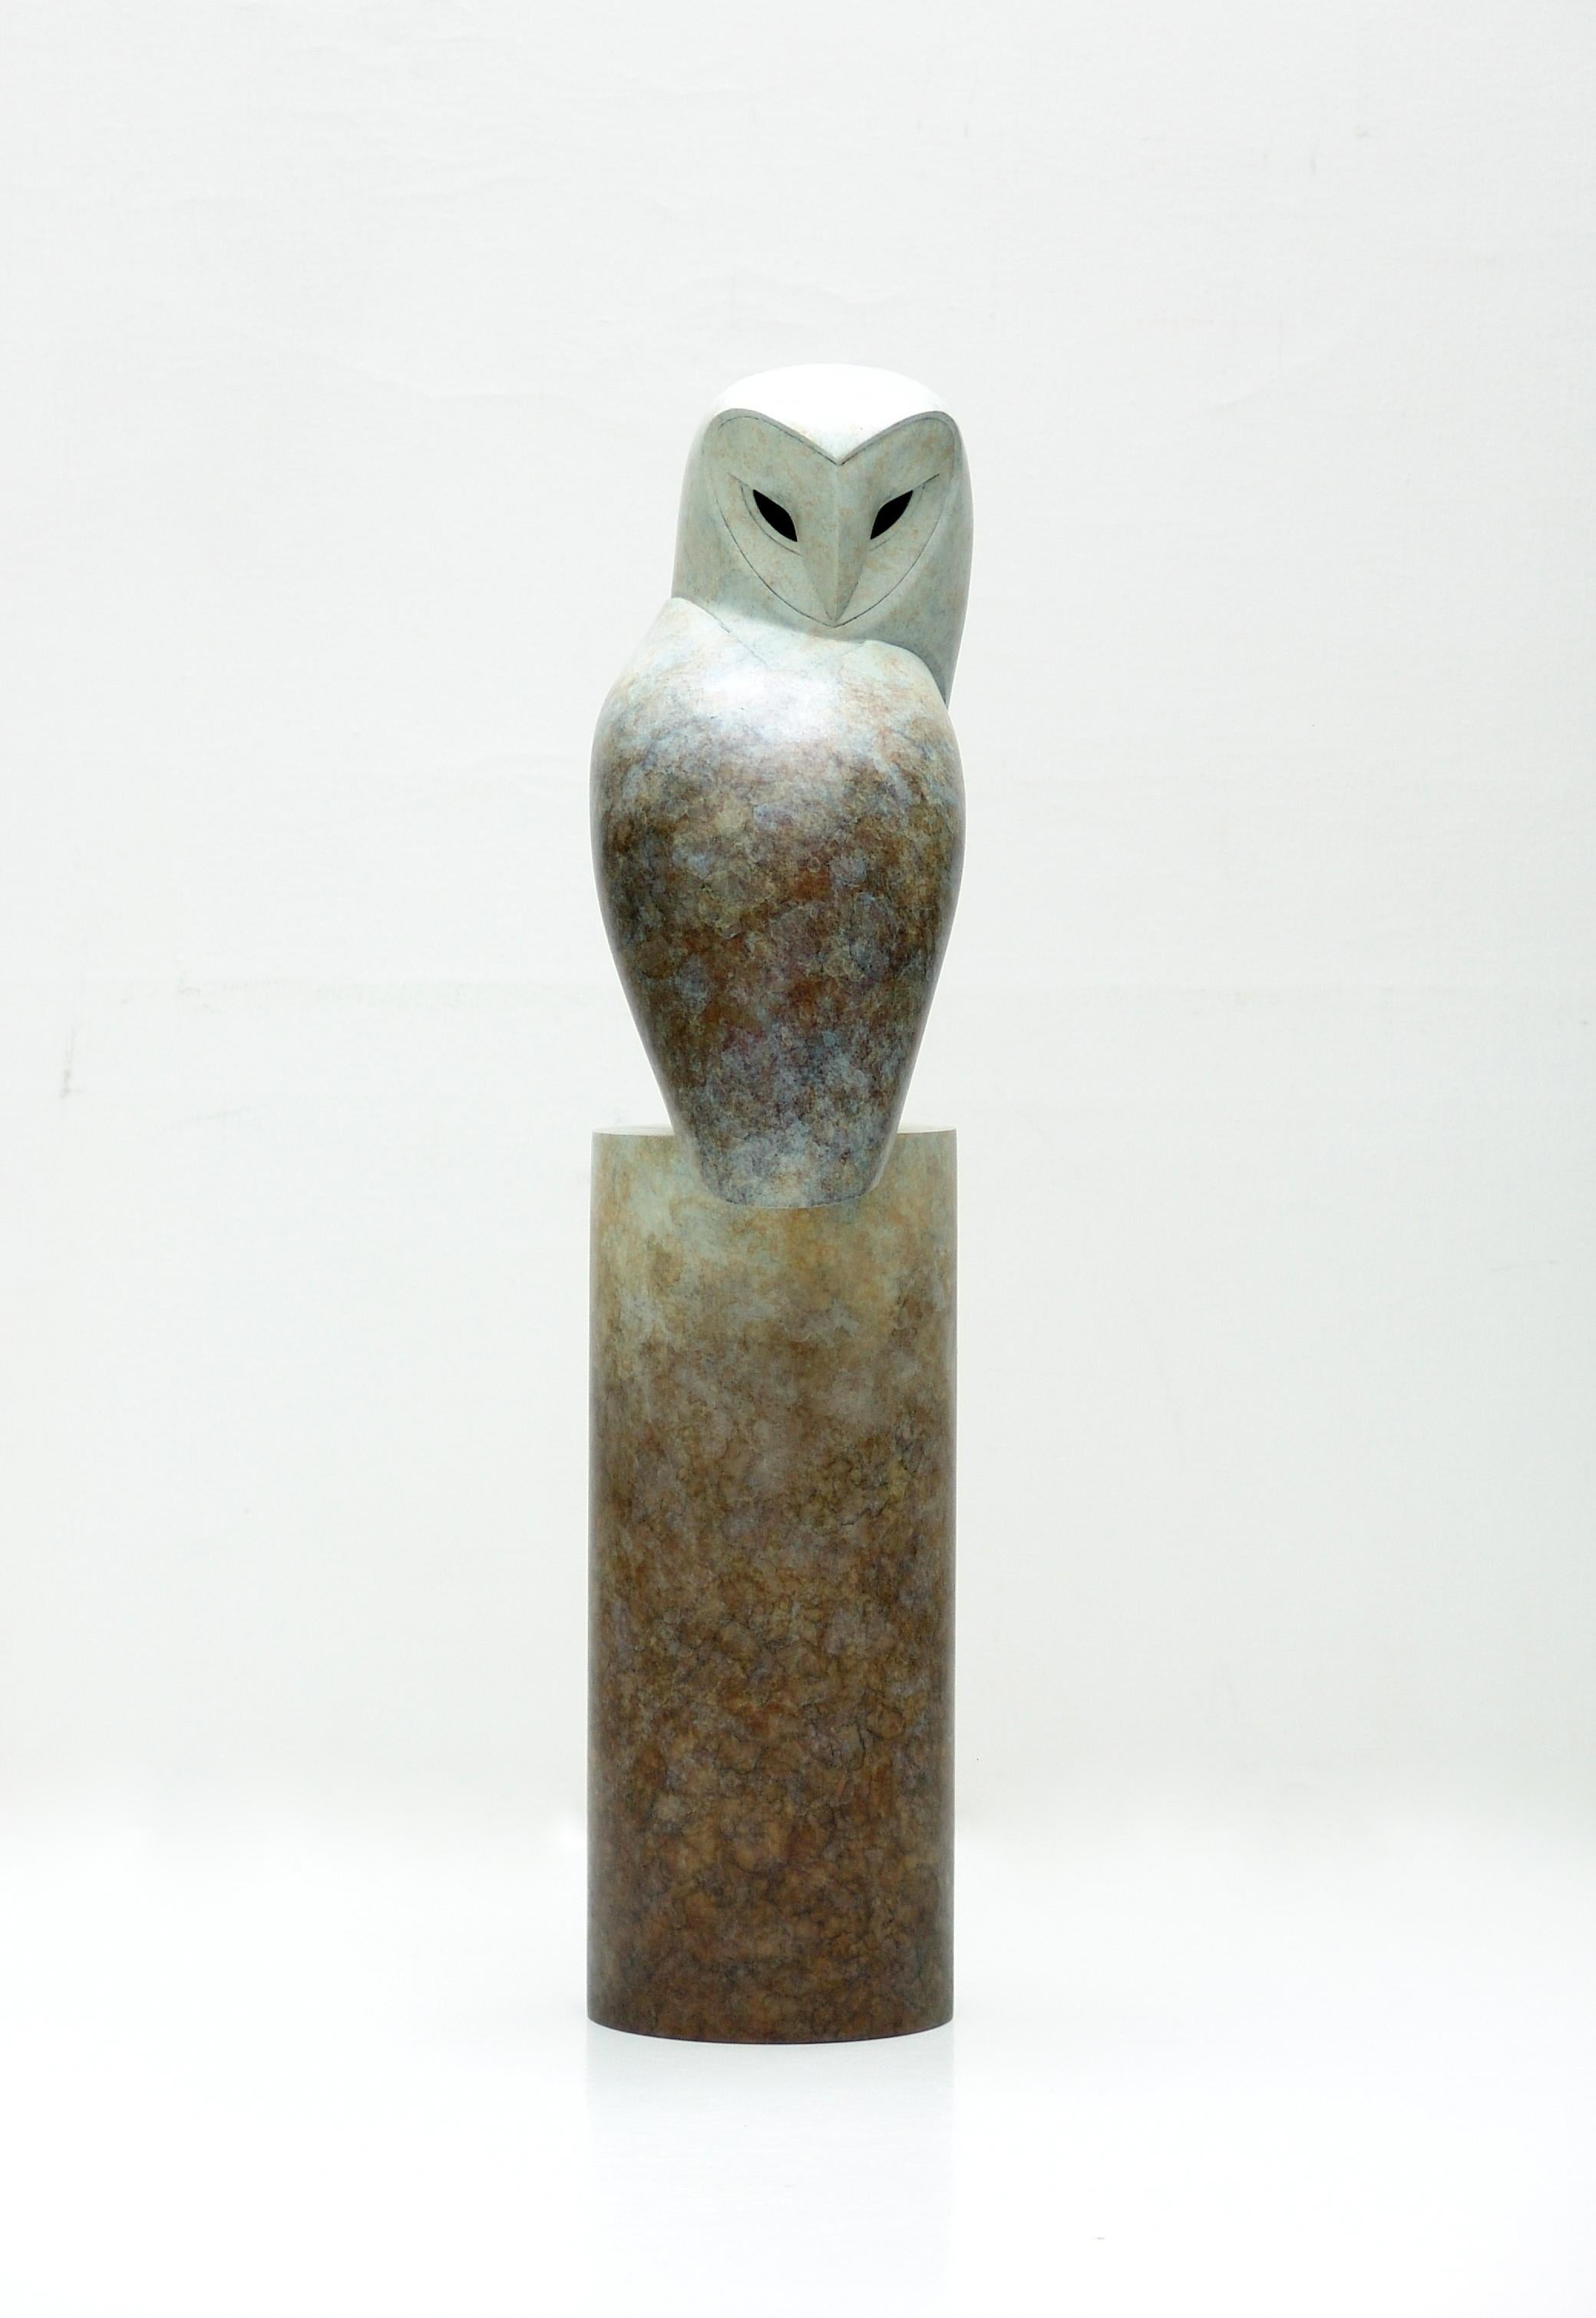 Anthony Theakston Figurative Sculpture - "Turnaround" Contemporary Bronze Sculpture Portrait of an Owl